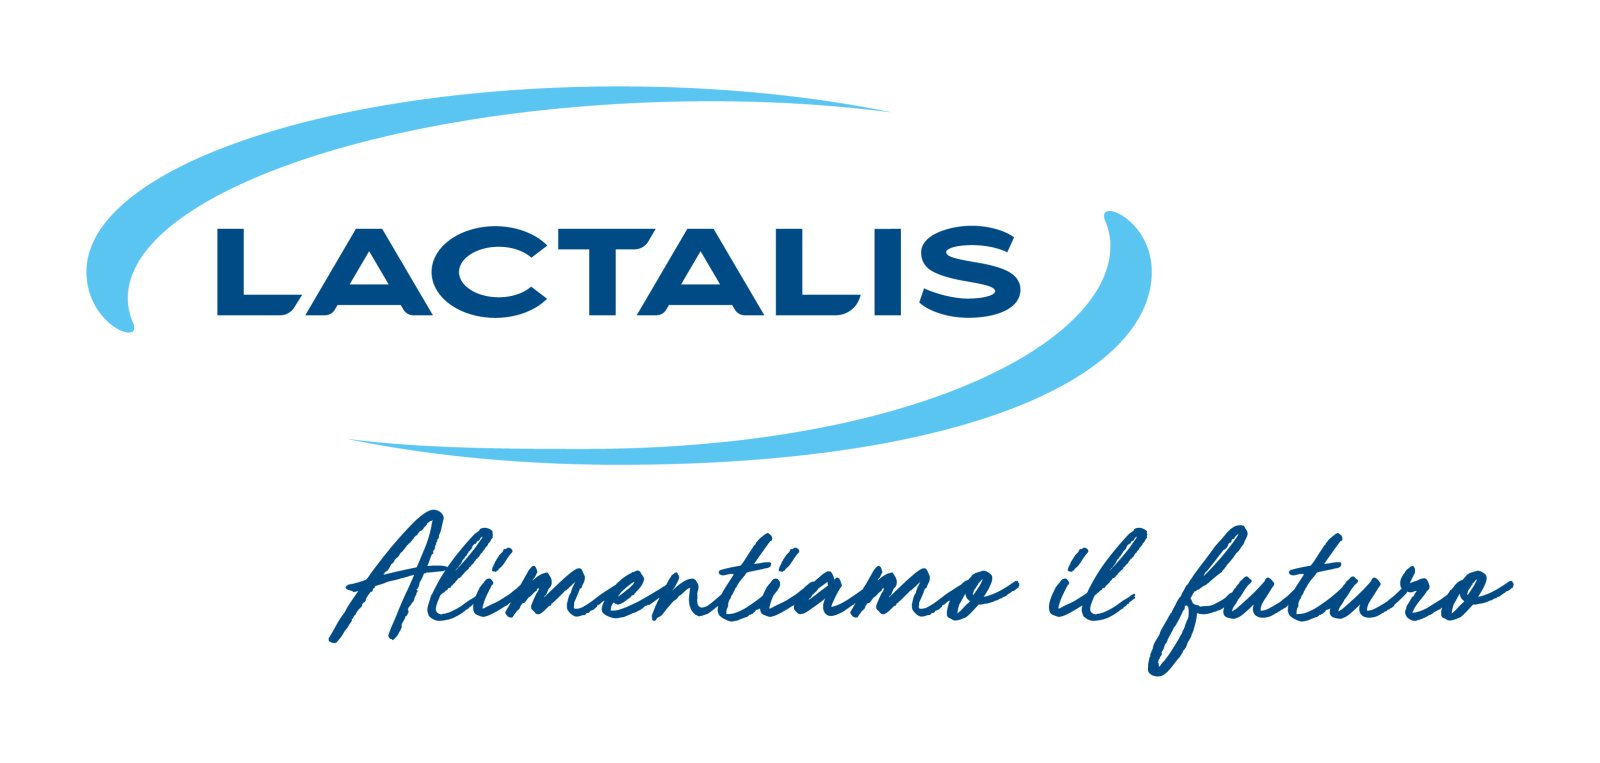 Logo Gruppo Lactalis Italia